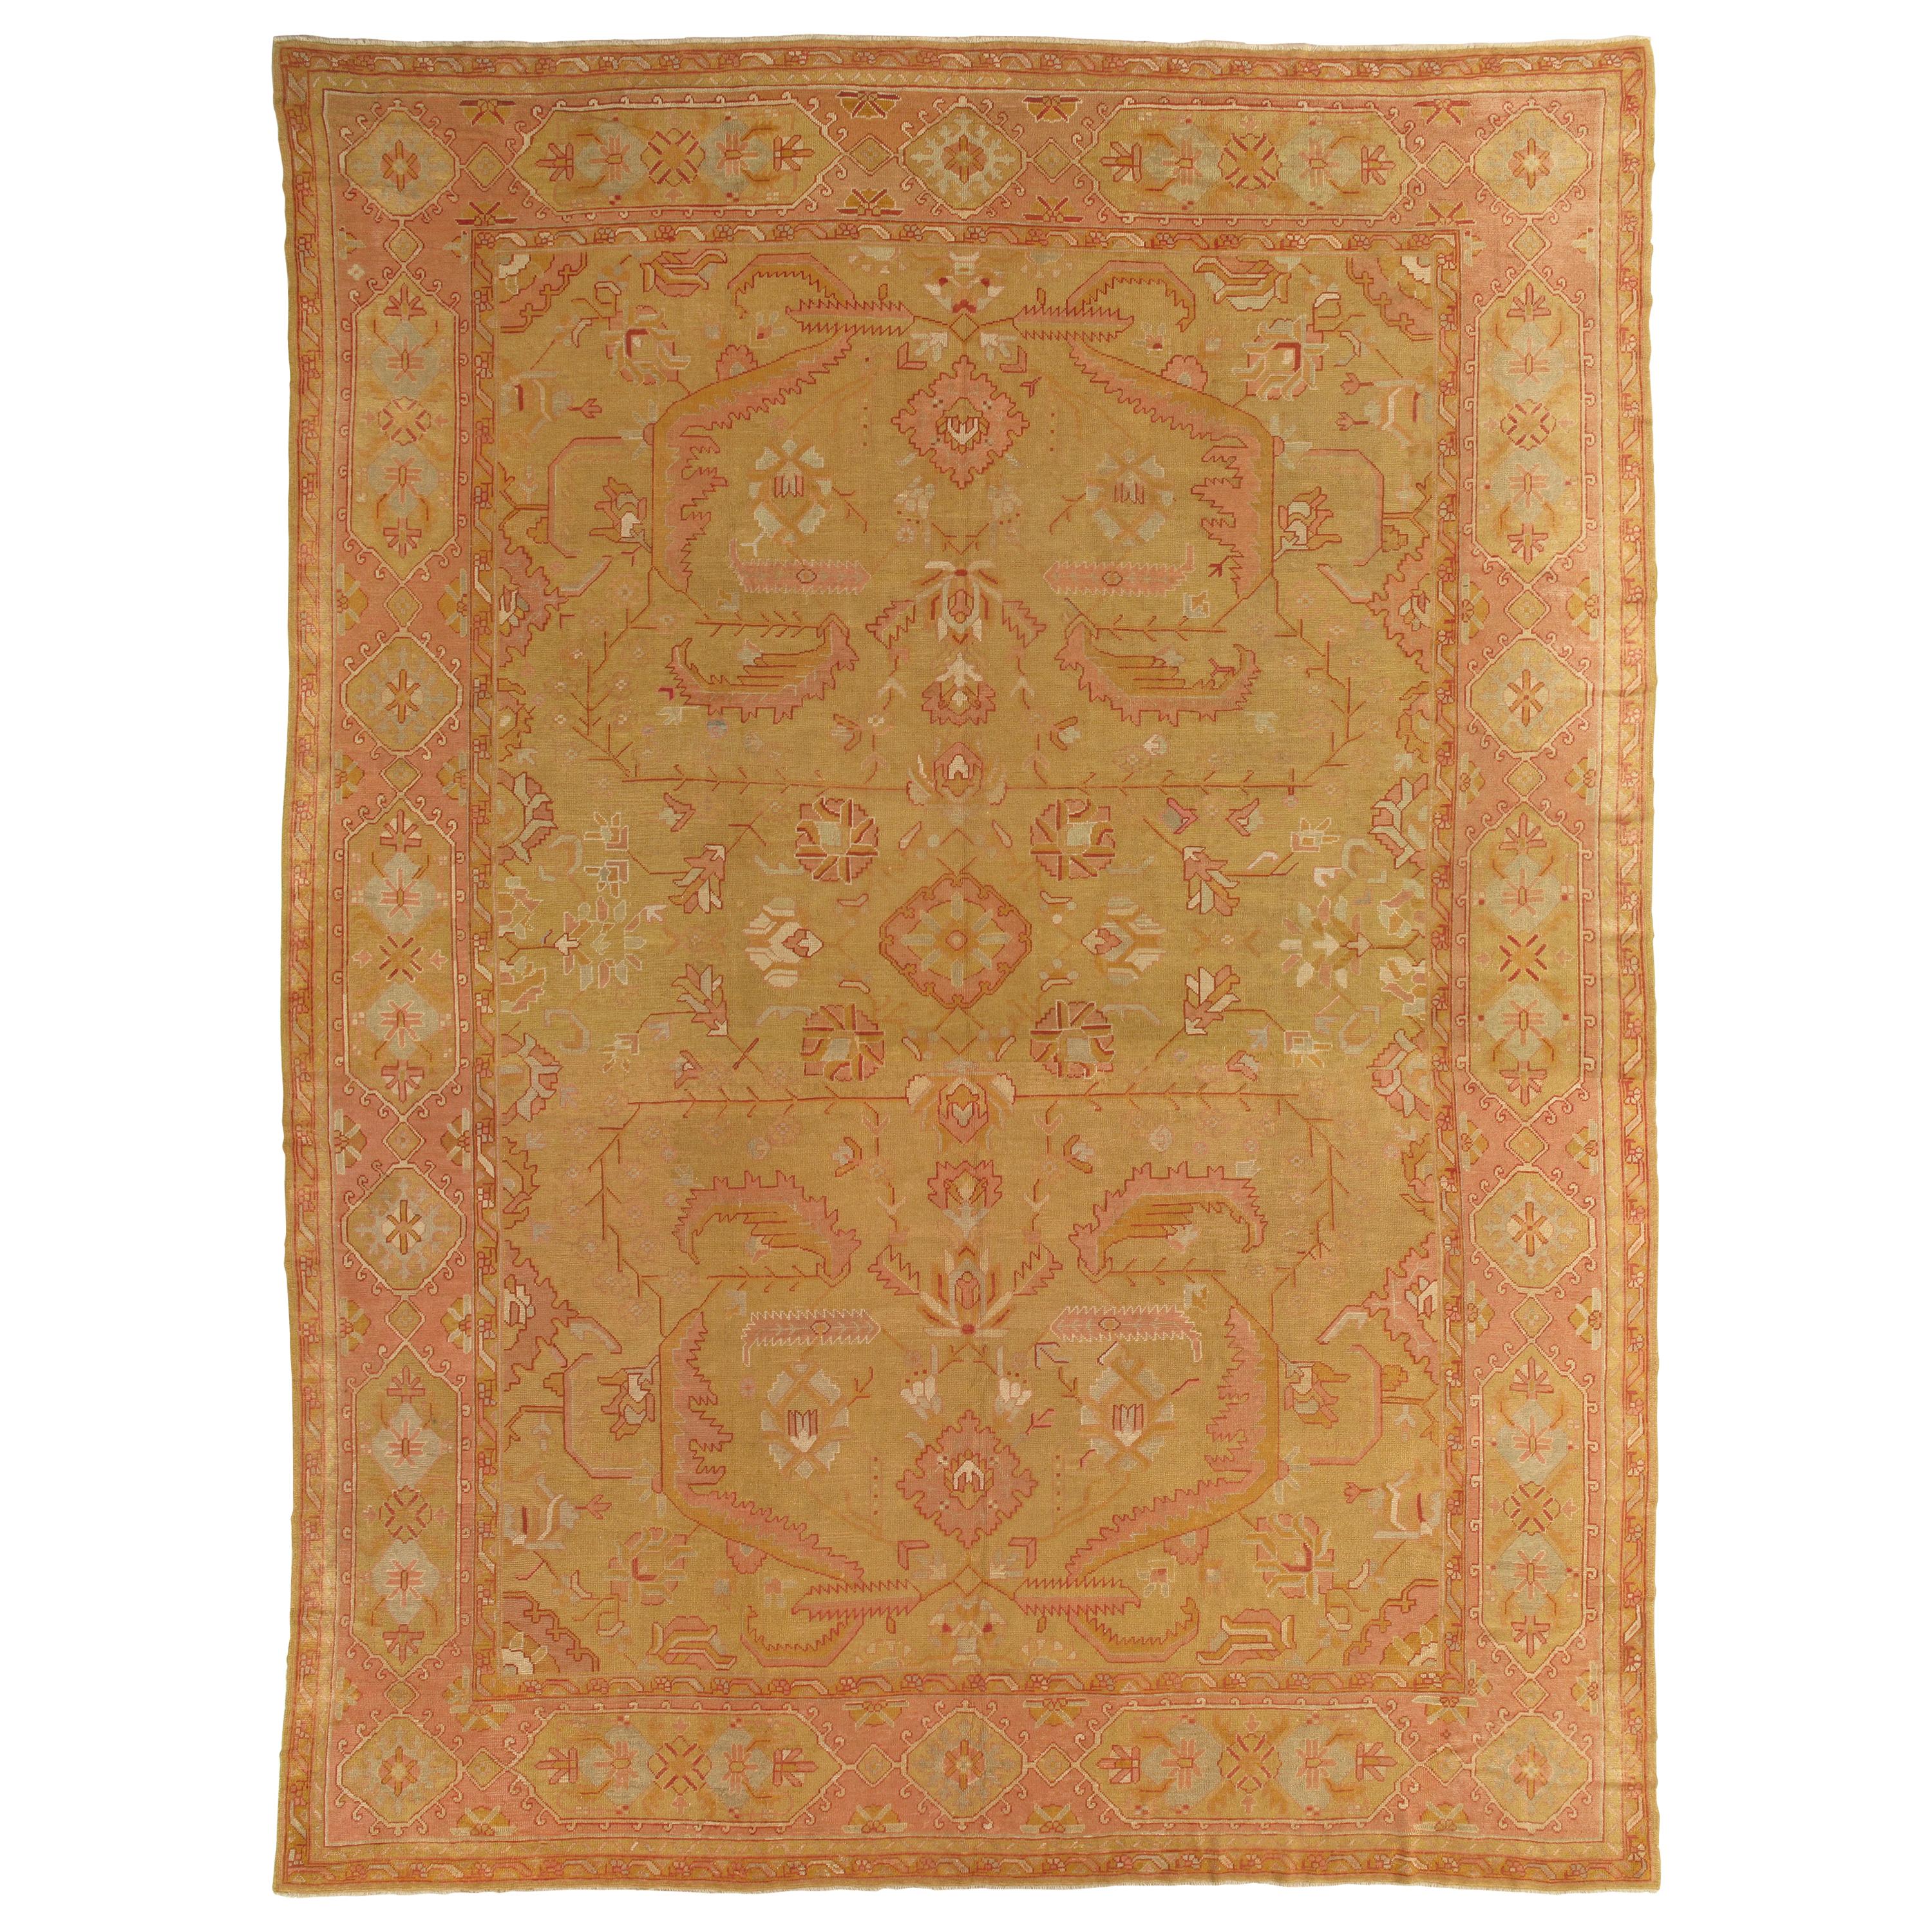 An Oushak Carpet, Turkish Rugs, Handmade Oriental Rugs, Gold, Green, Pink, Ivory